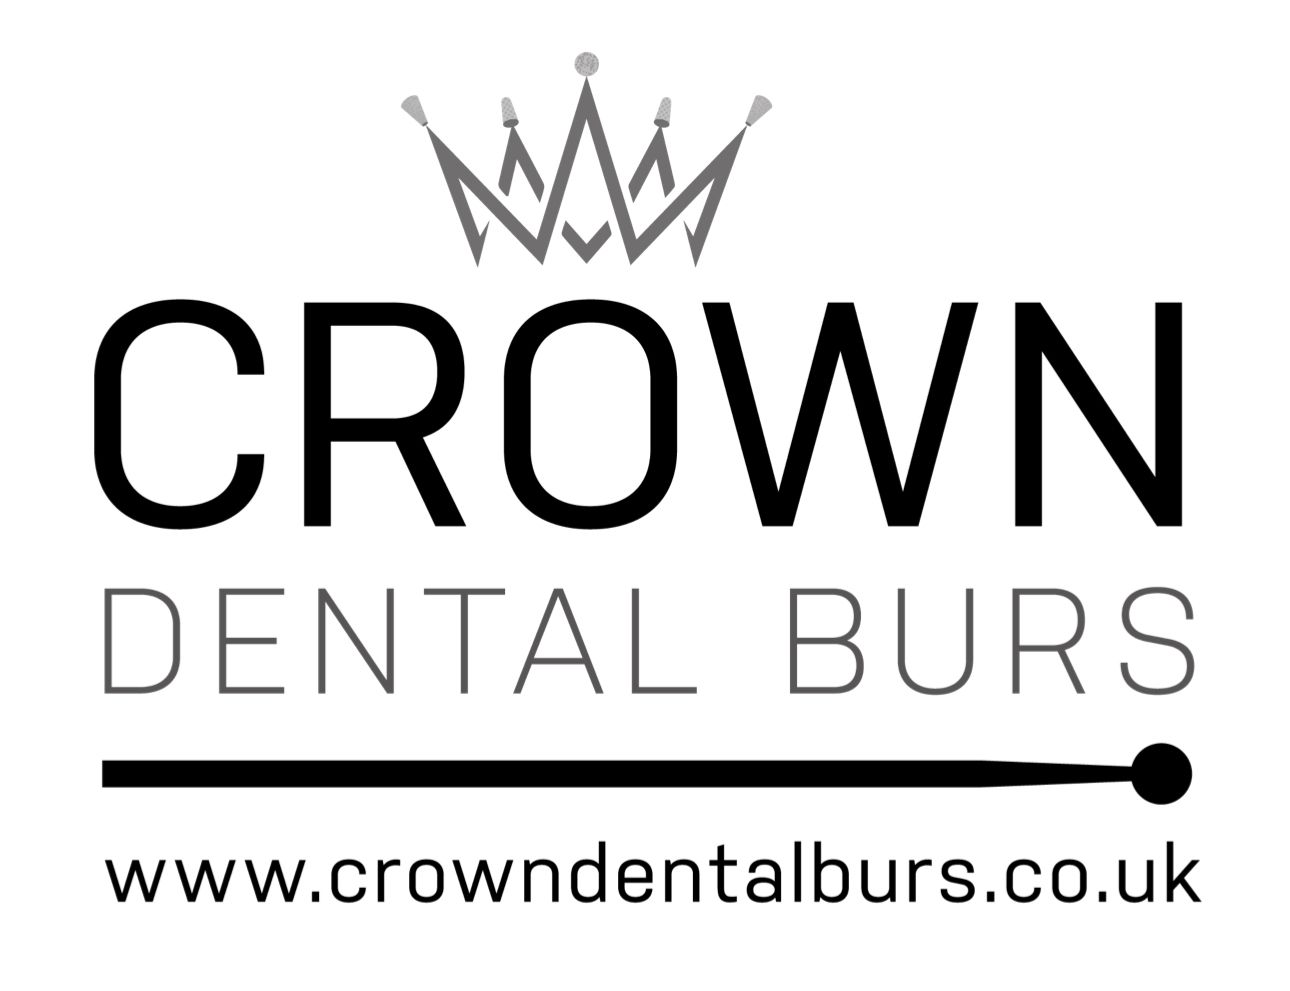 Crown Dental Burs Ltd